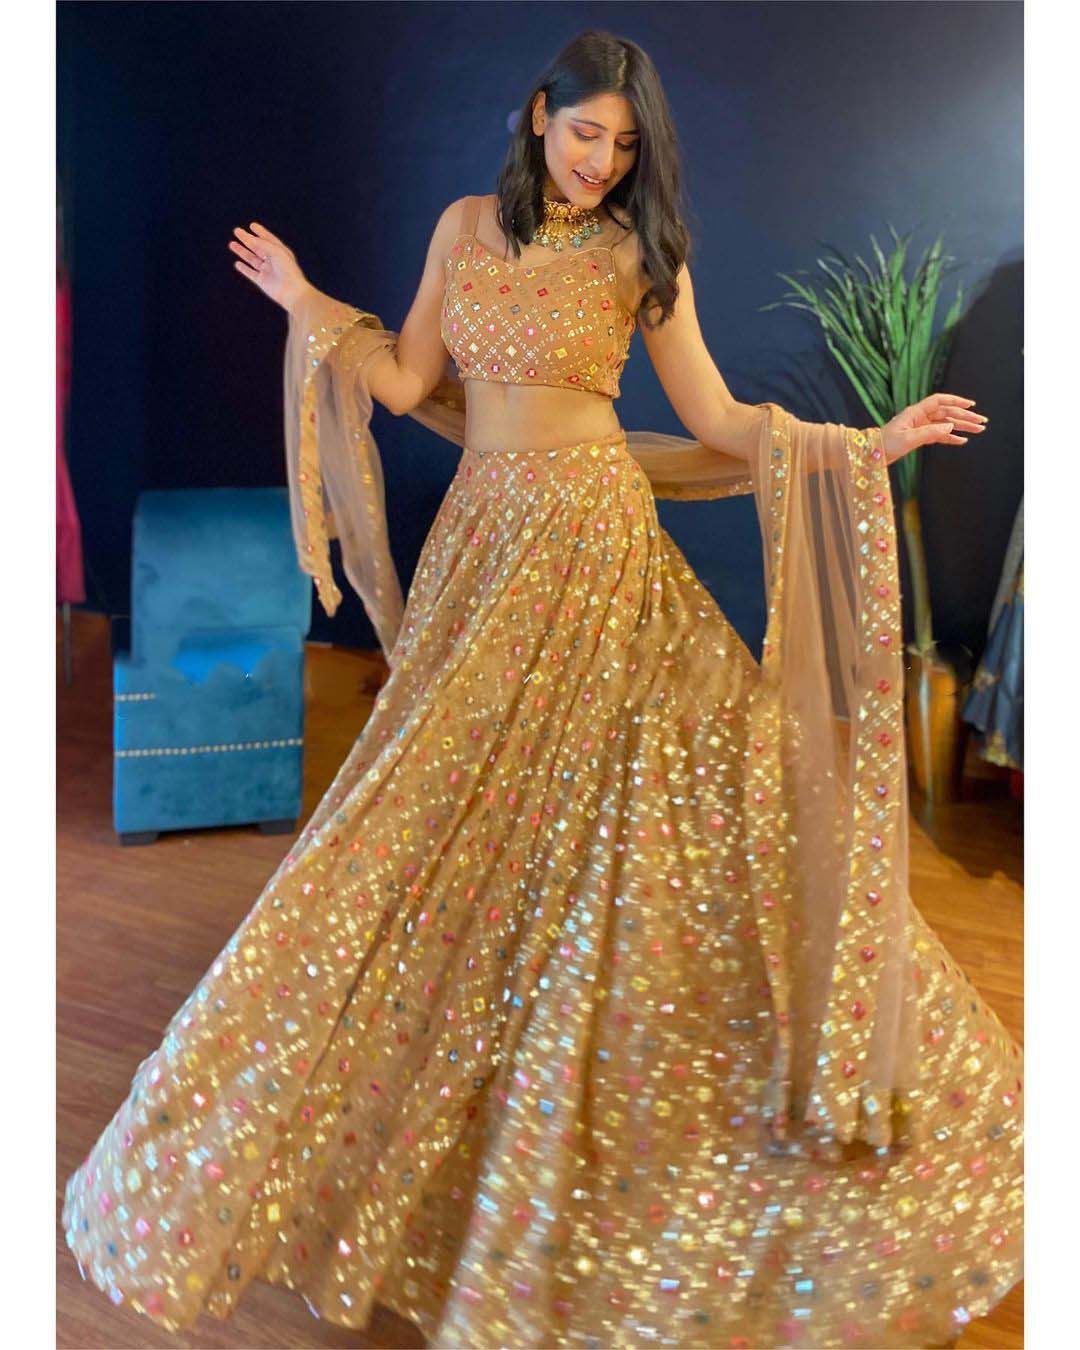 Latest Stunning Yankita Kapoor Golden Color Bridal Lehenga